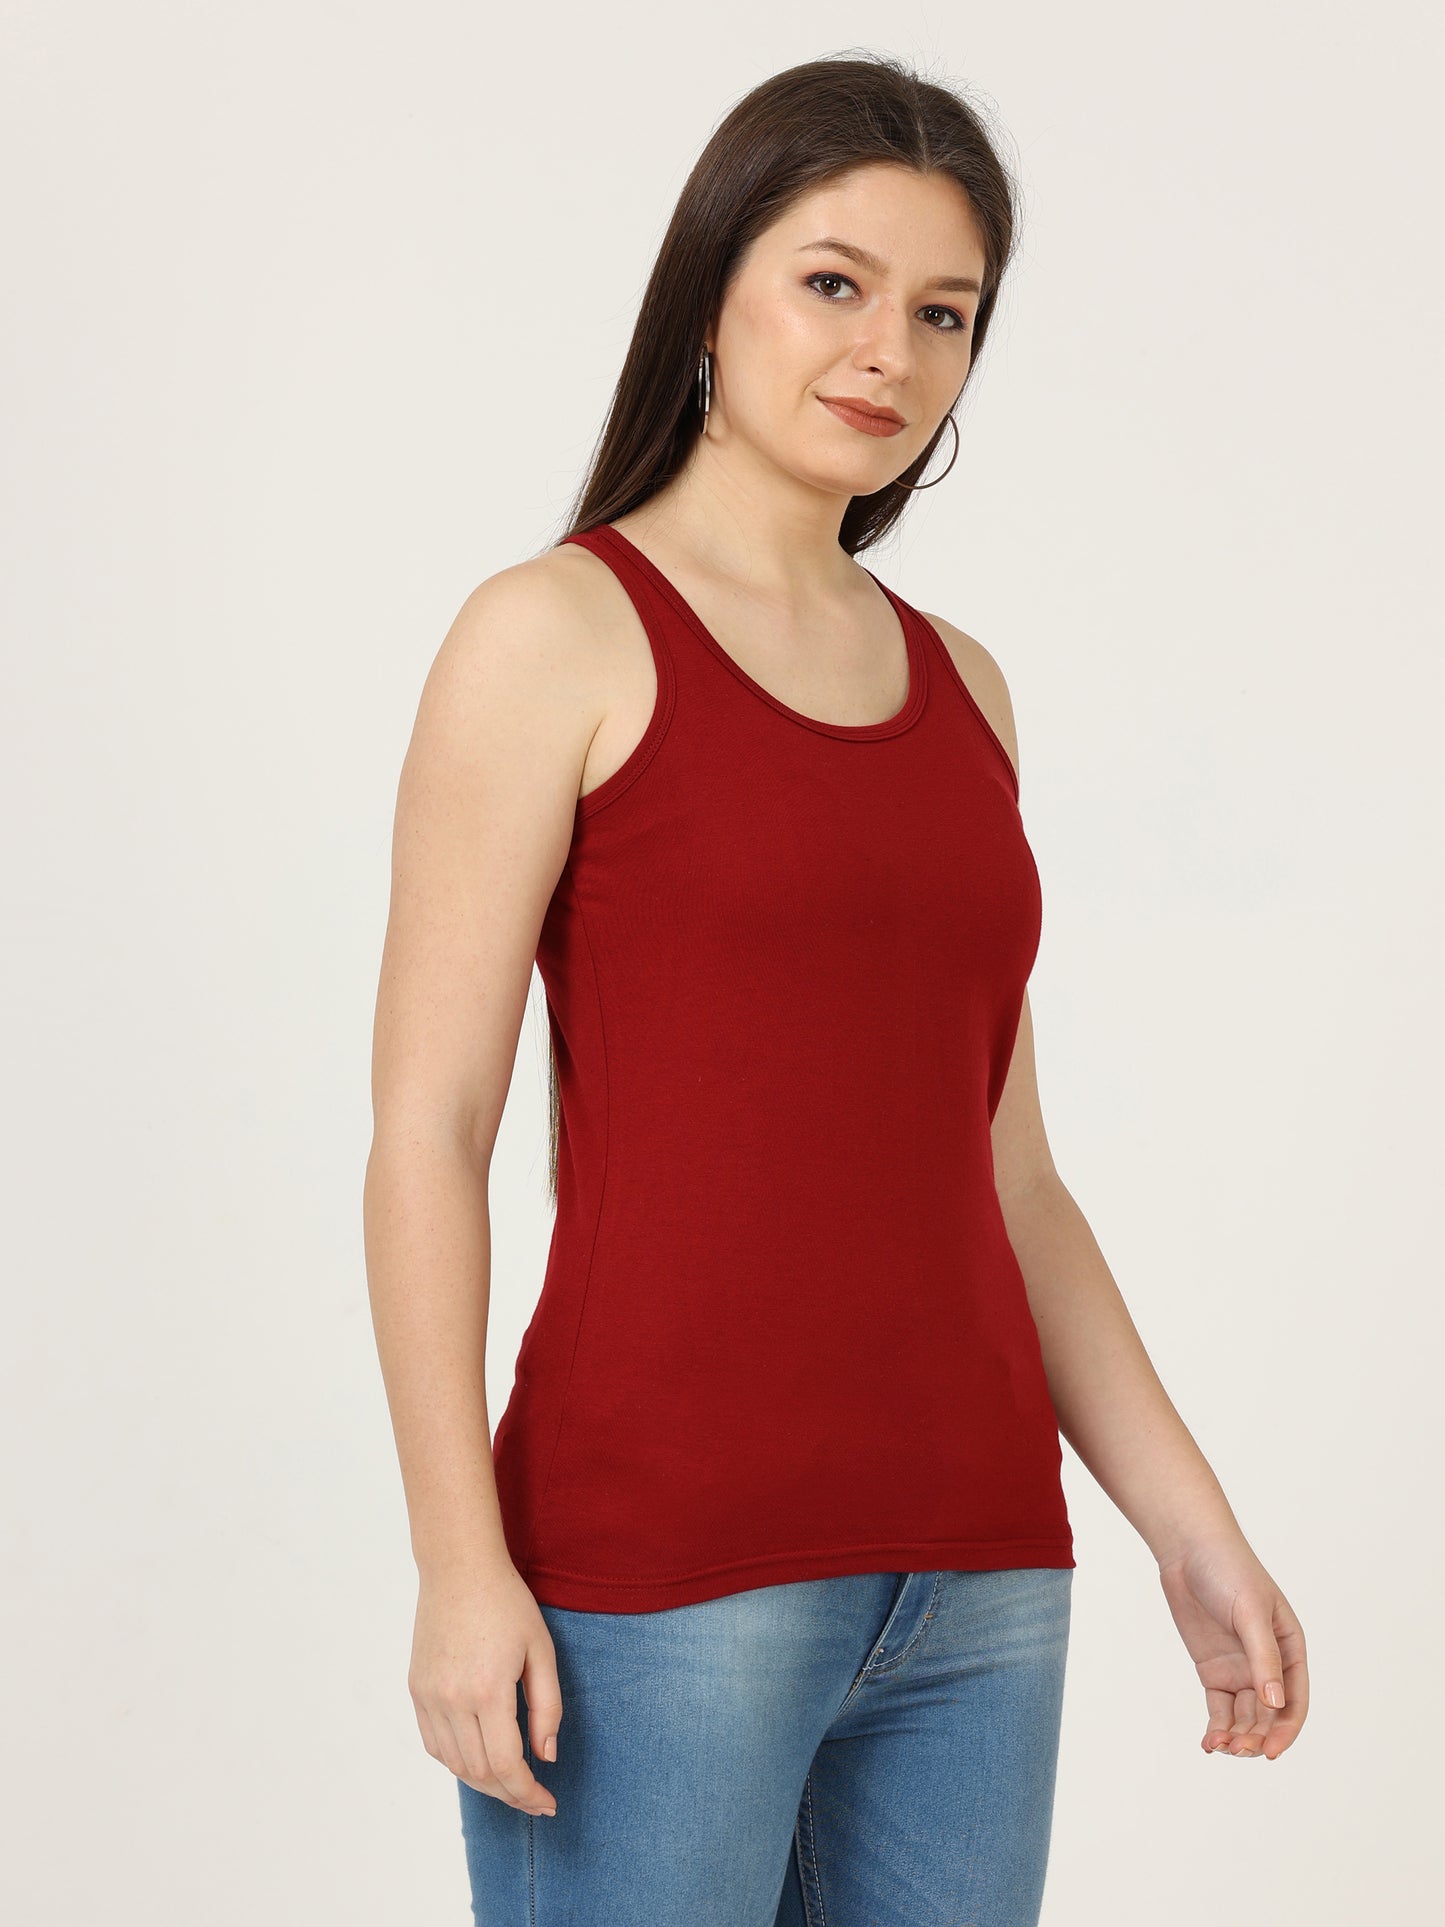 Women's Cotton Plain Sleeveless Maroon Color Top